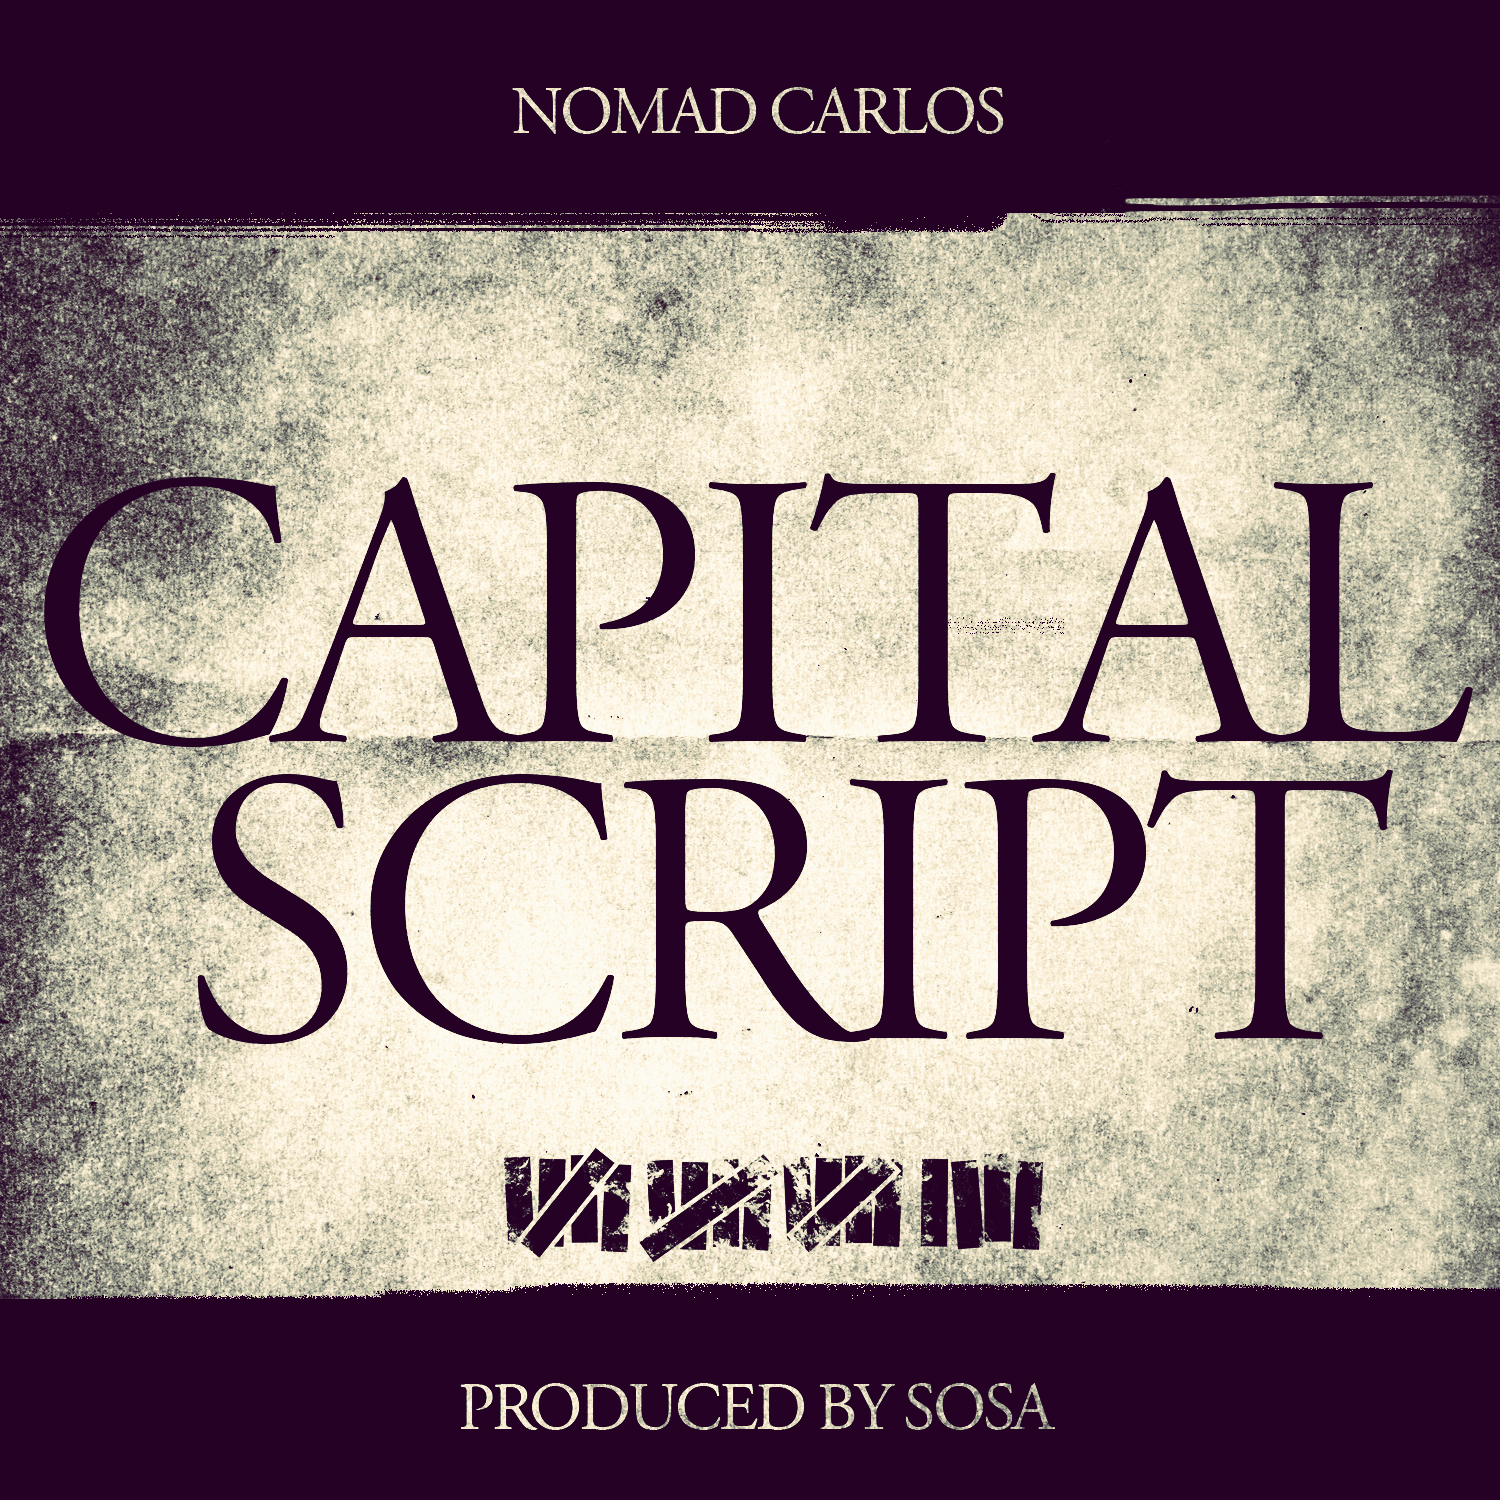 Capital Script Art 2